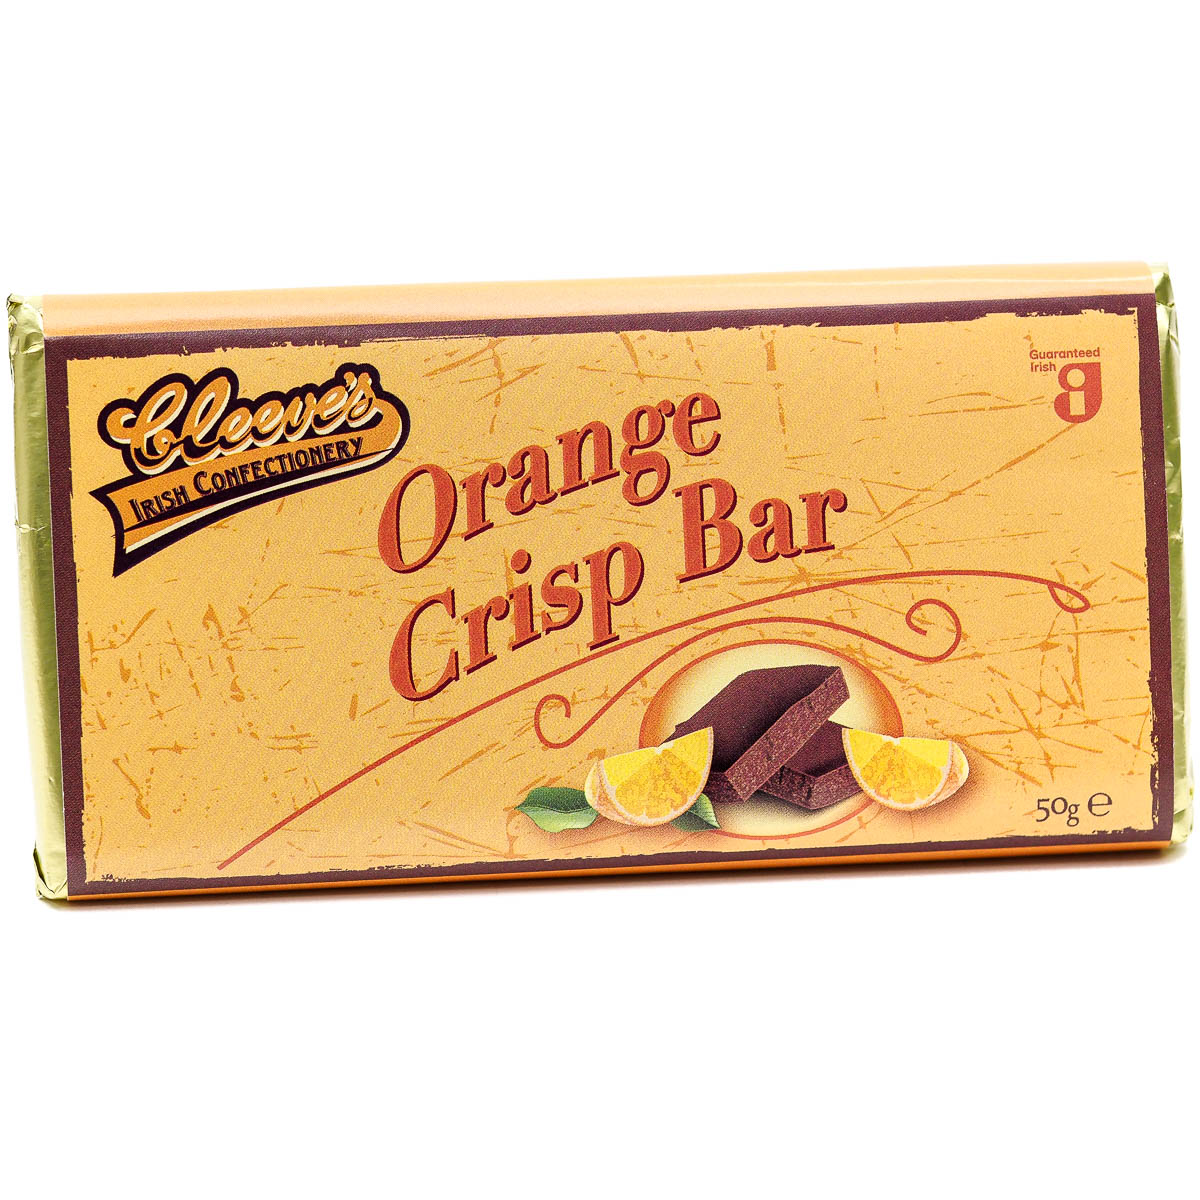 Orange Crisp Chocolate Bar (Cleeves Irish Confectionery)